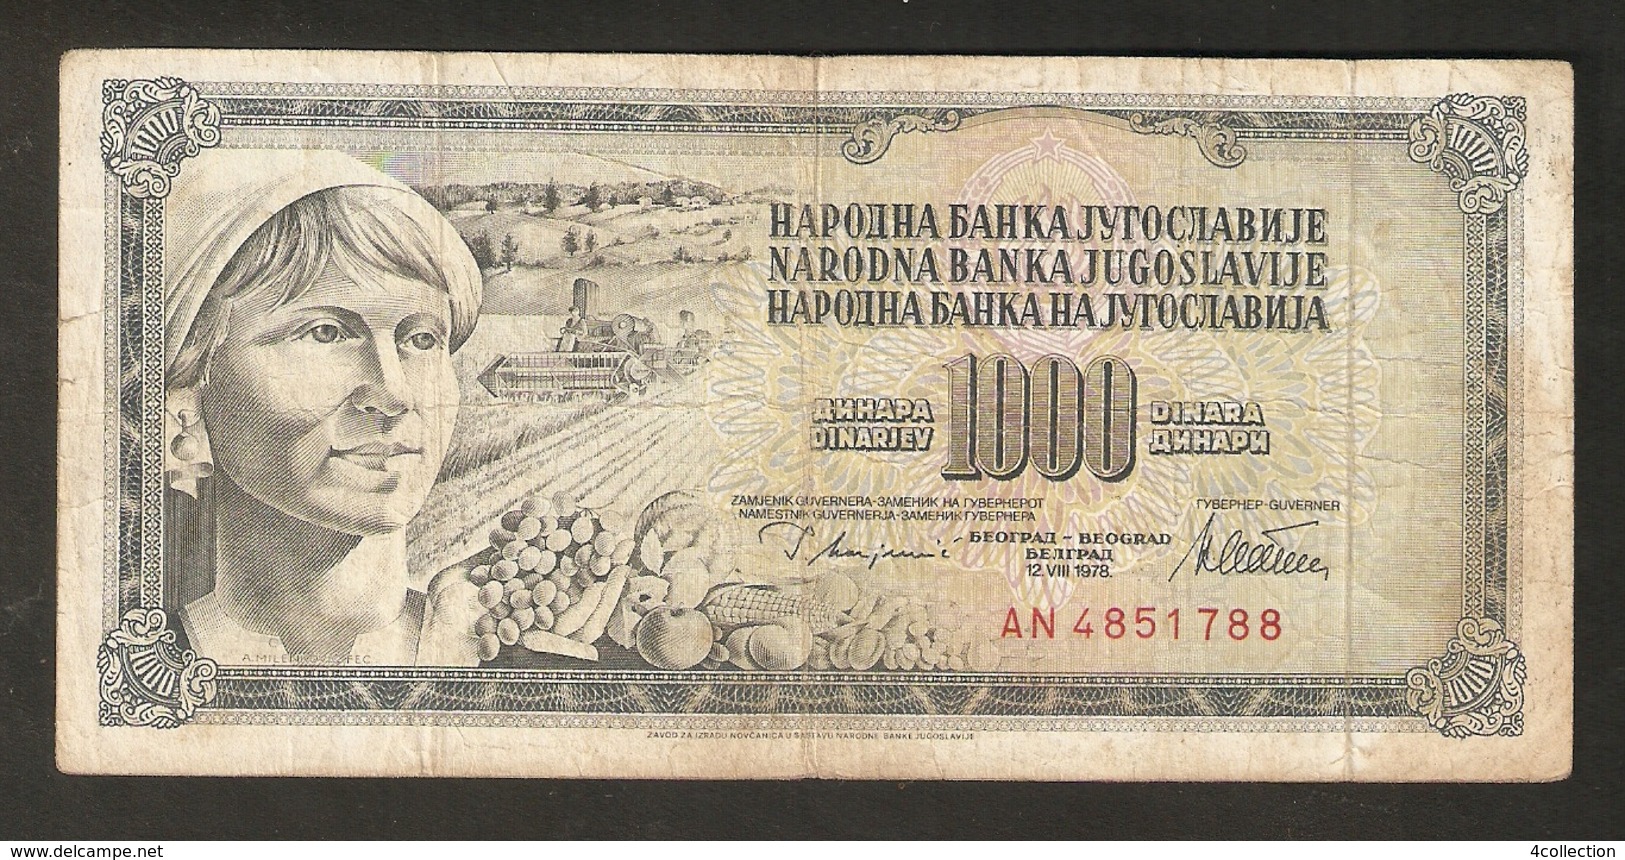 T. Yugoslavia Jugoslavije 1000 Dinara Dinarjev Beograd 12 VIII 1978 # AN 4851788 - Yugoslavia